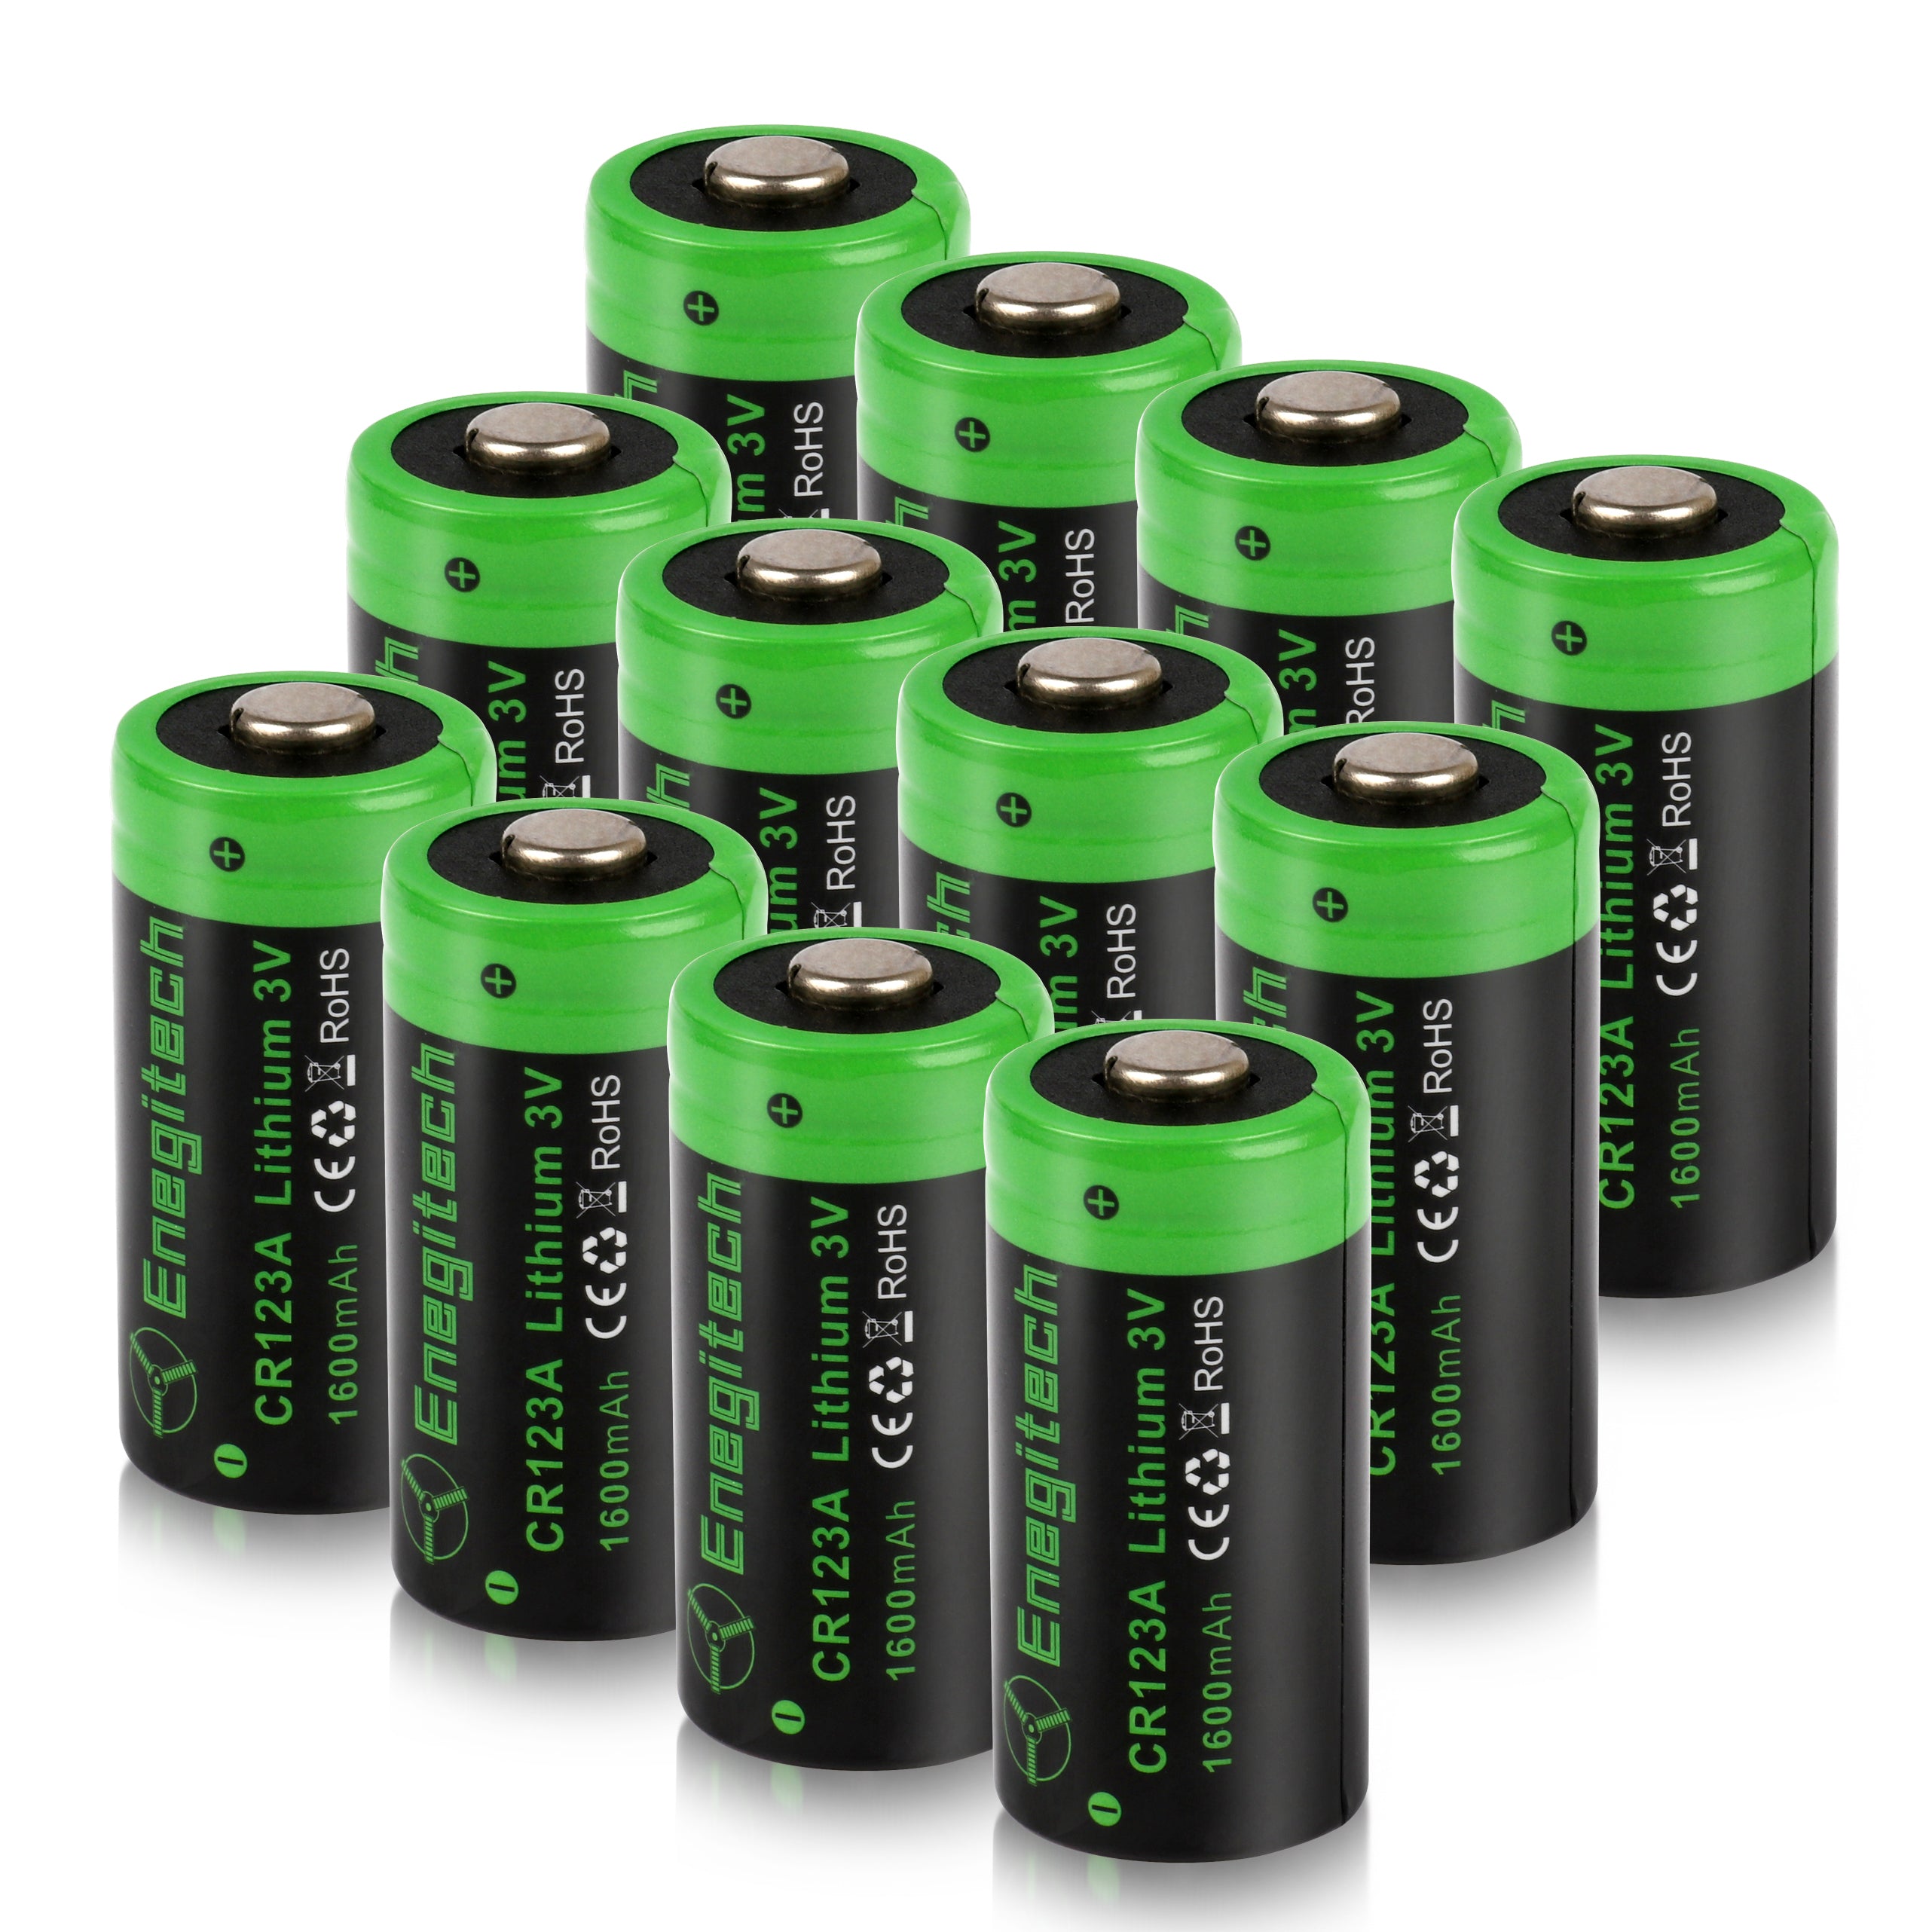 Shop CR123a 3v lithium battery  3V lithium batteries CR123a - Enegitech